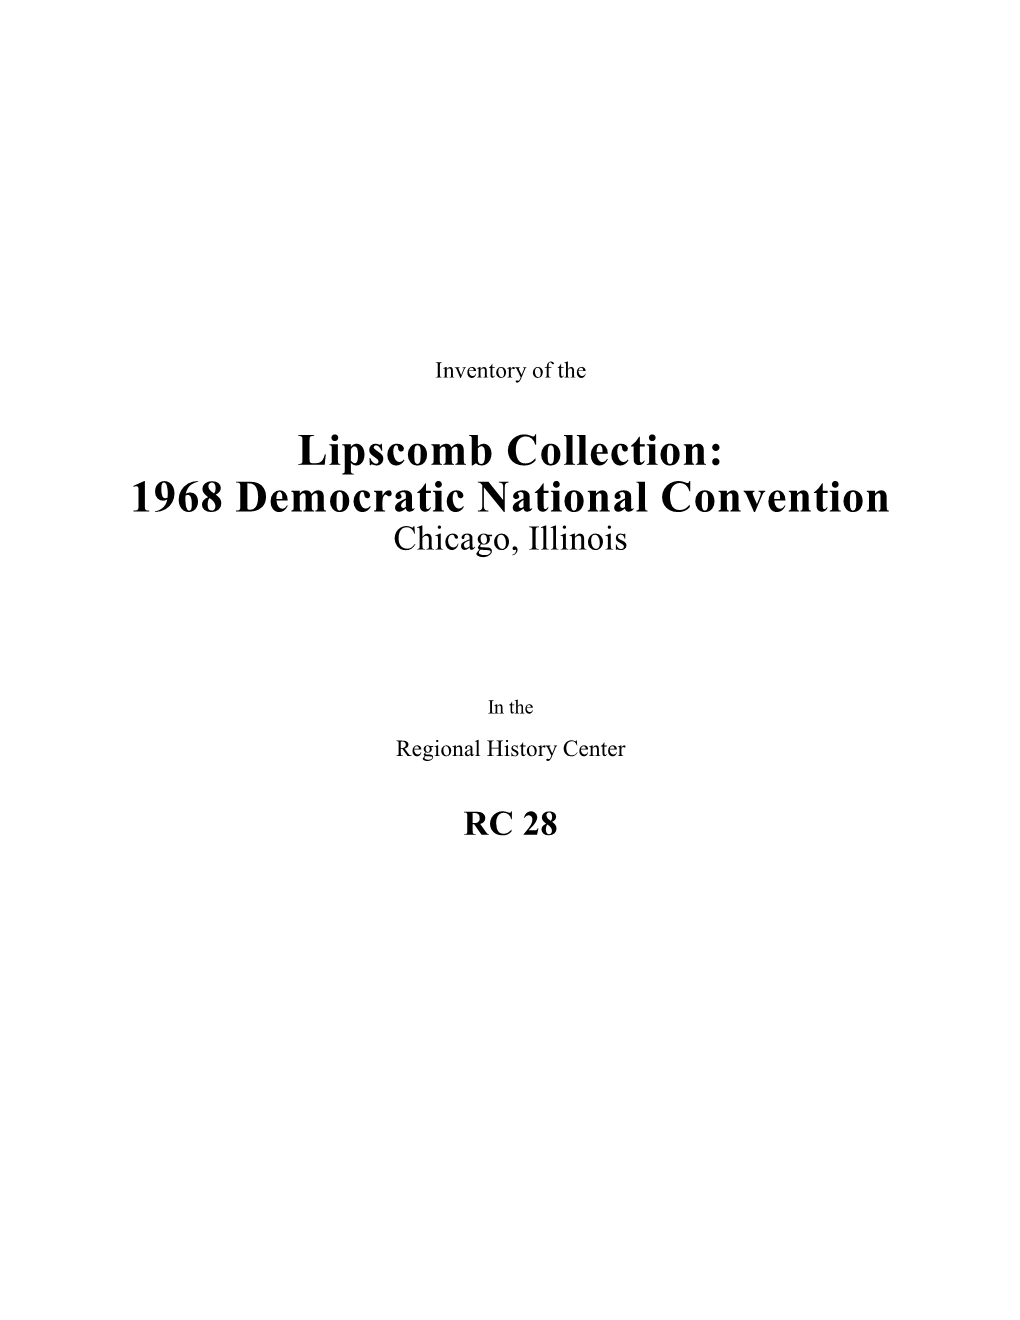 1968 Democratic National Convention Chicago, Illinois